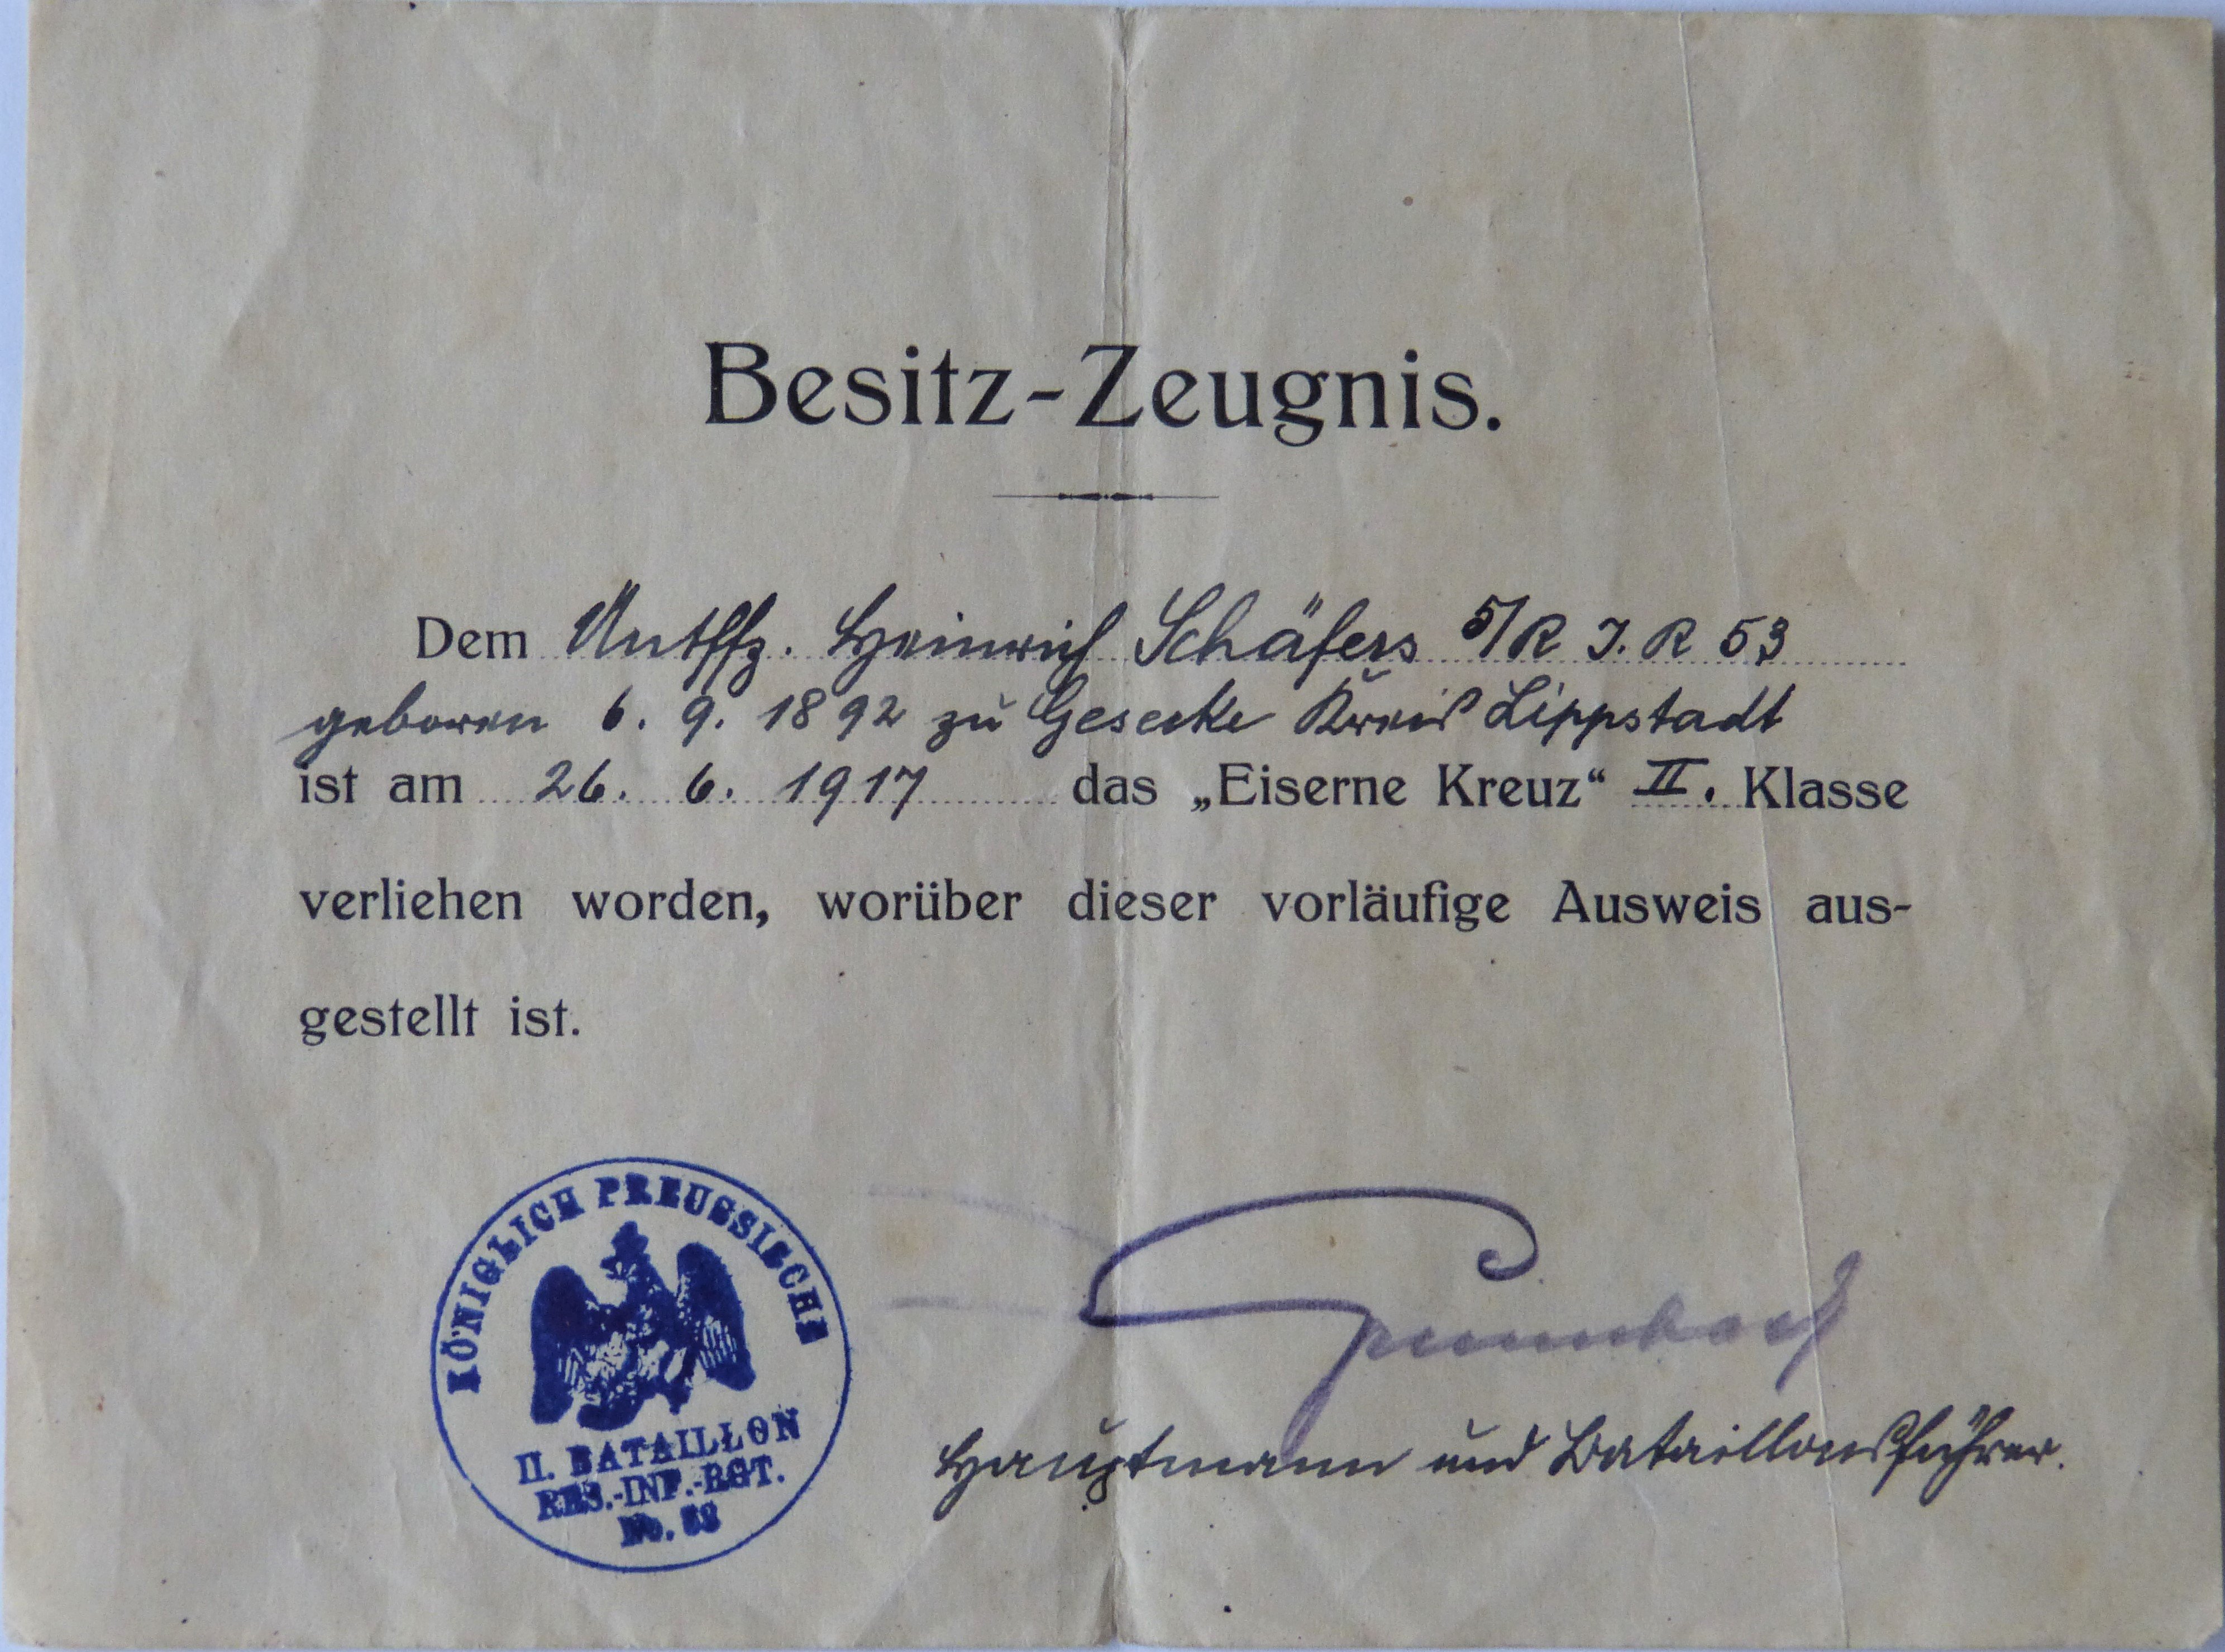 Ordensbesitzzeugnis für Eisernes Kreuz II. Klasse (Städt. Hellweg-Museum Geseke CC BY-NC-SA)